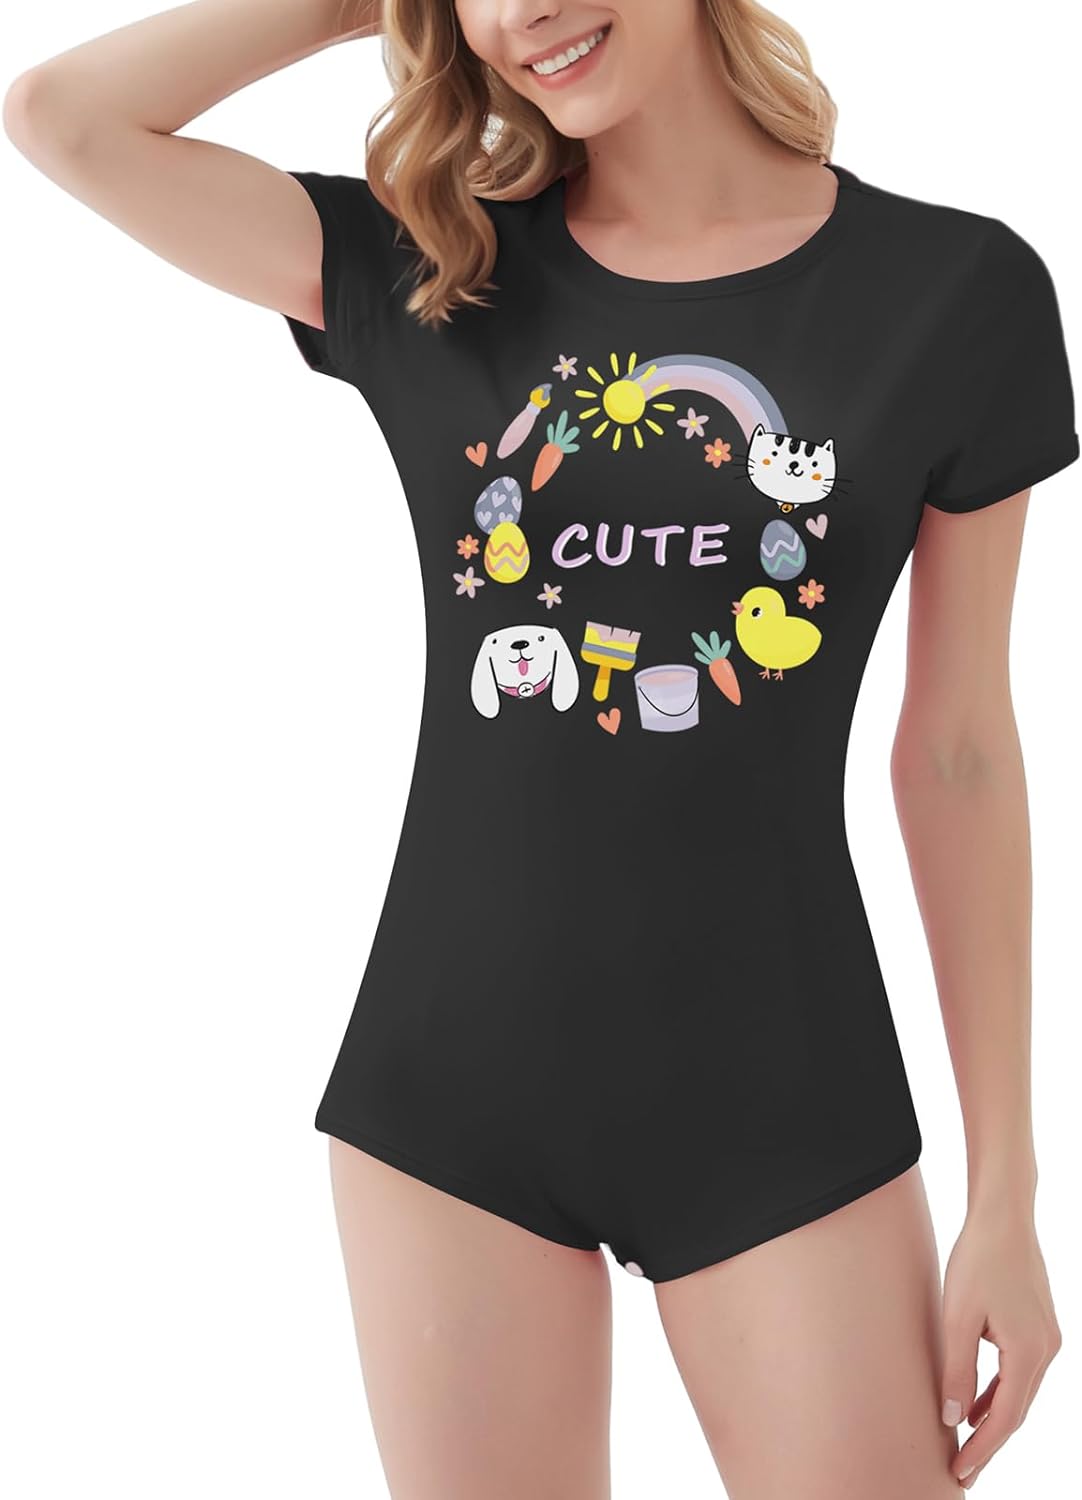 Women’s Short Sleeve Romper Pajamas Bodysuit Cute Animals Onesie Jumpsuit Nightwear Sleepwear